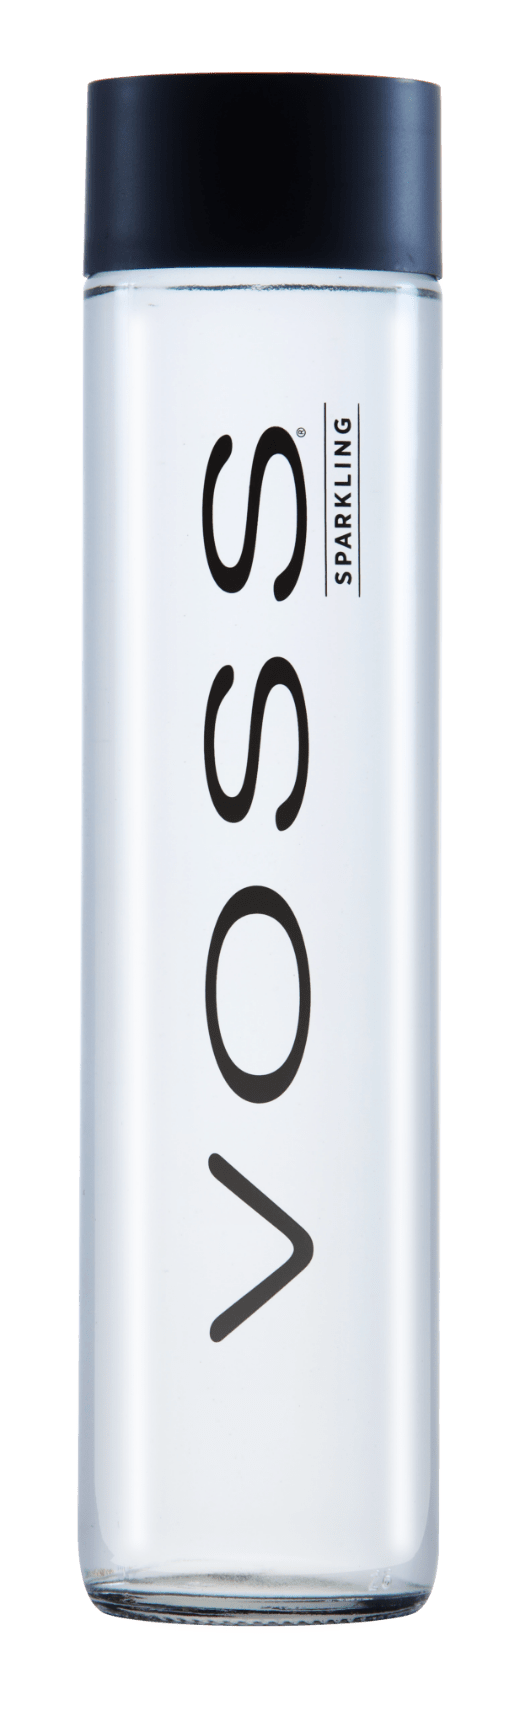 VOSS Sparkling Water Bottle